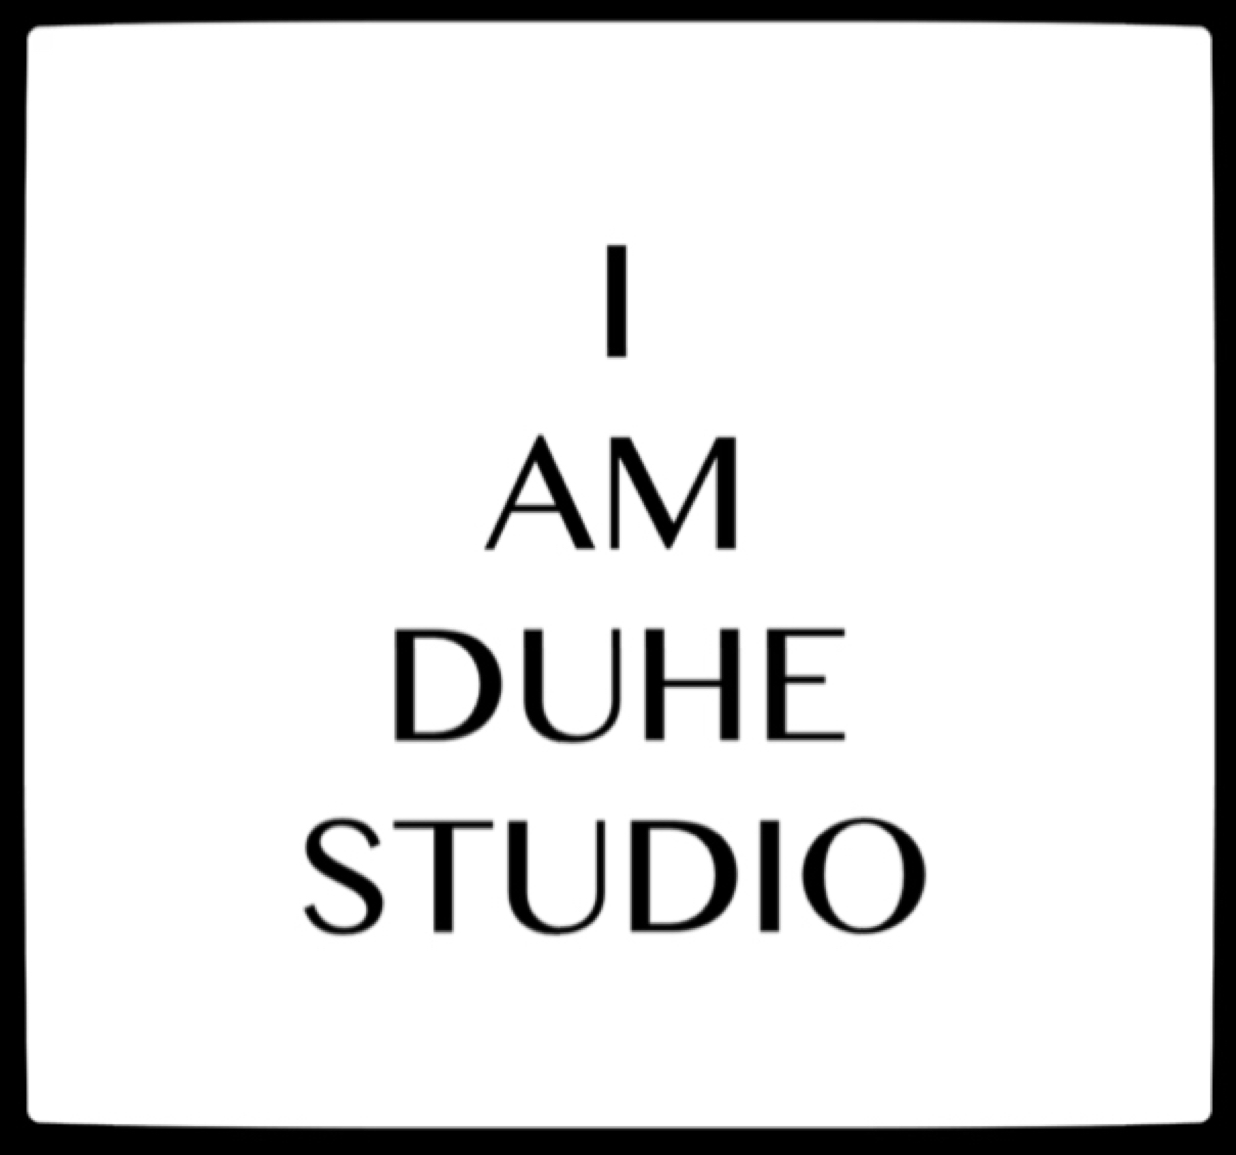 DUHE STUDIO